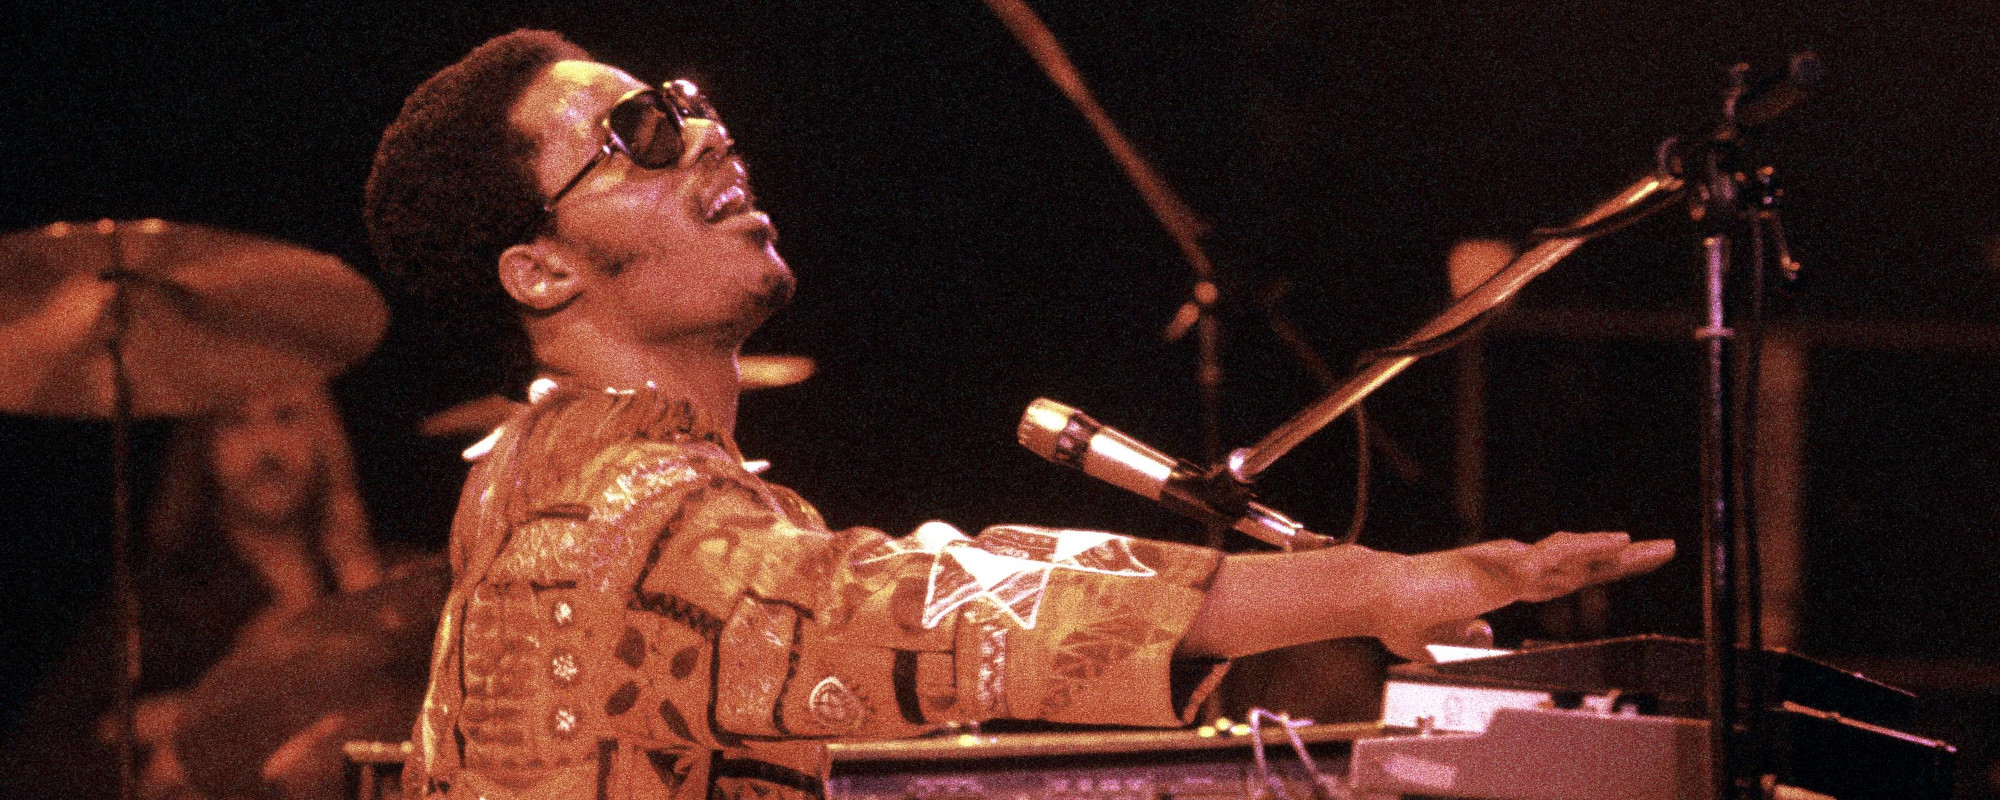 Ranking the 5 Best Songs on Stevie Wonder’s Masterpiece Album ‘Talking Book’